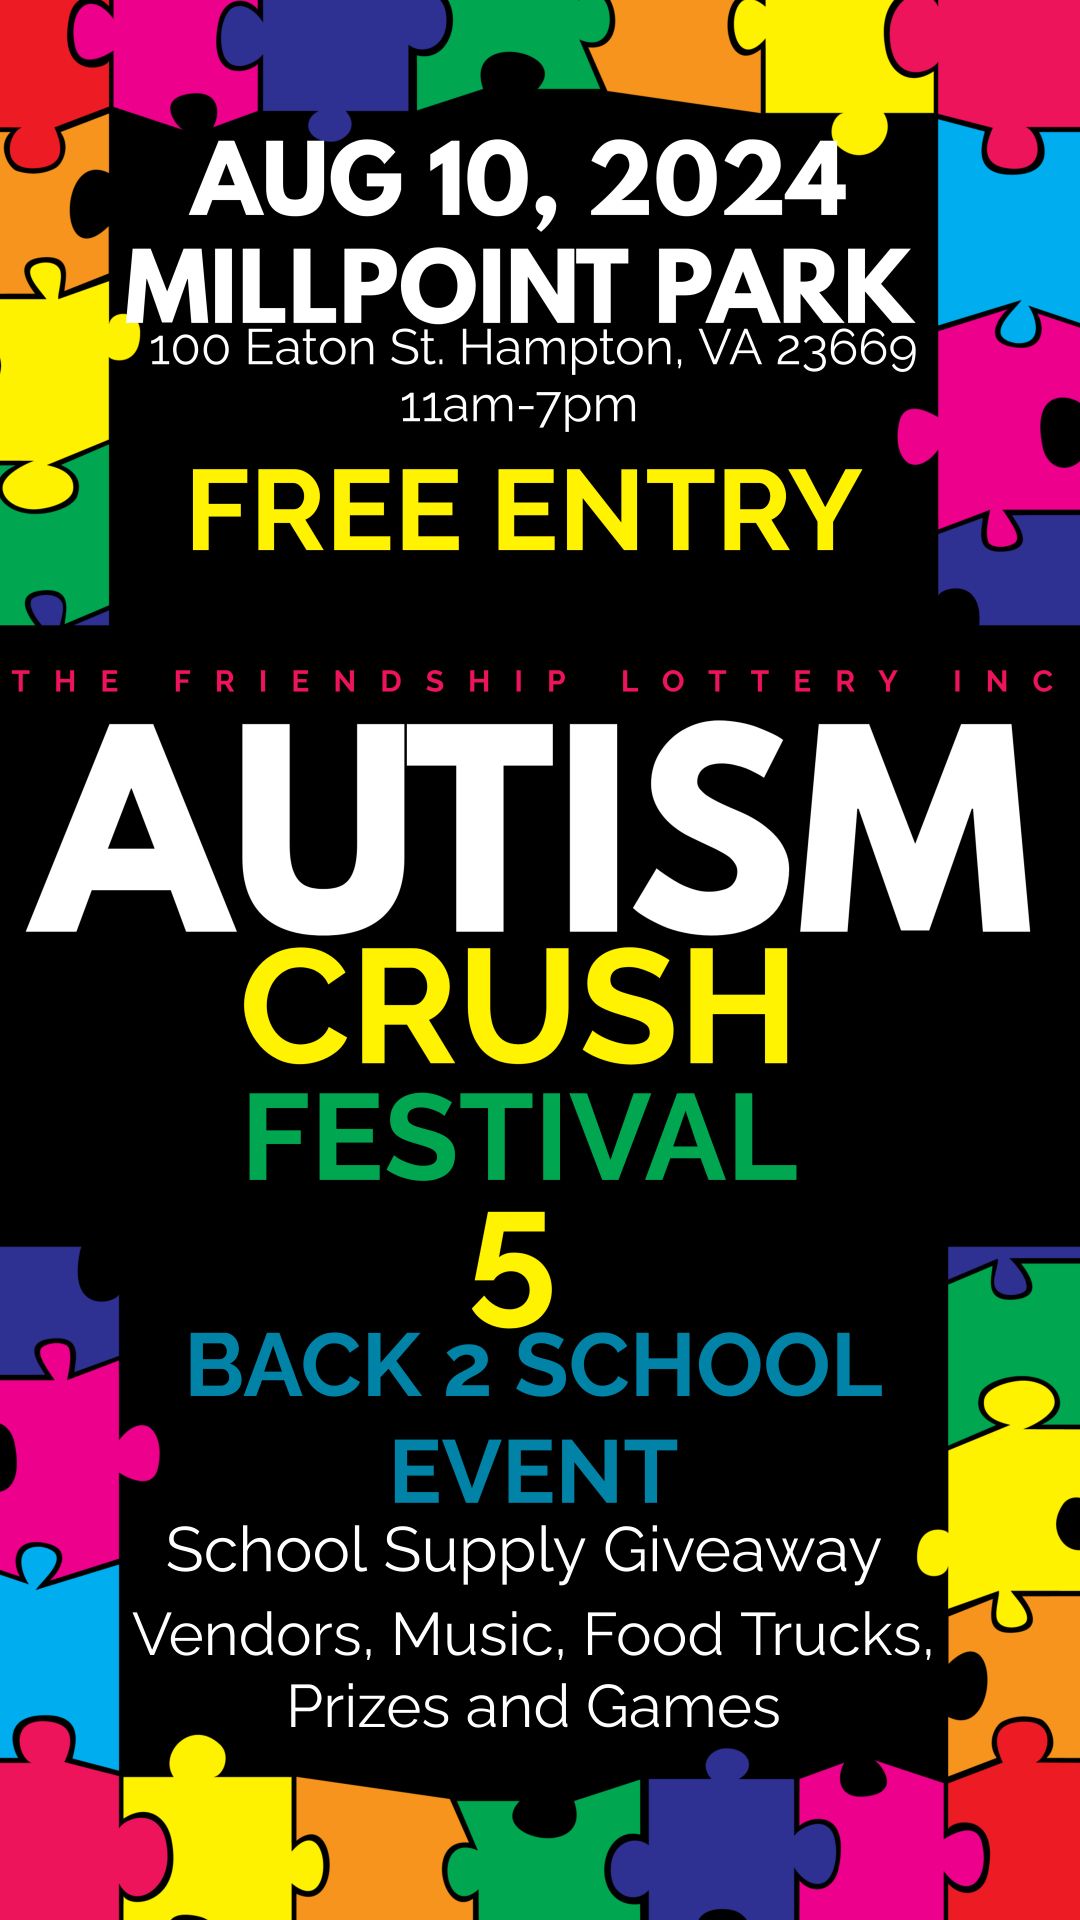 The Autism Crush Festival 5 Back 2 School 